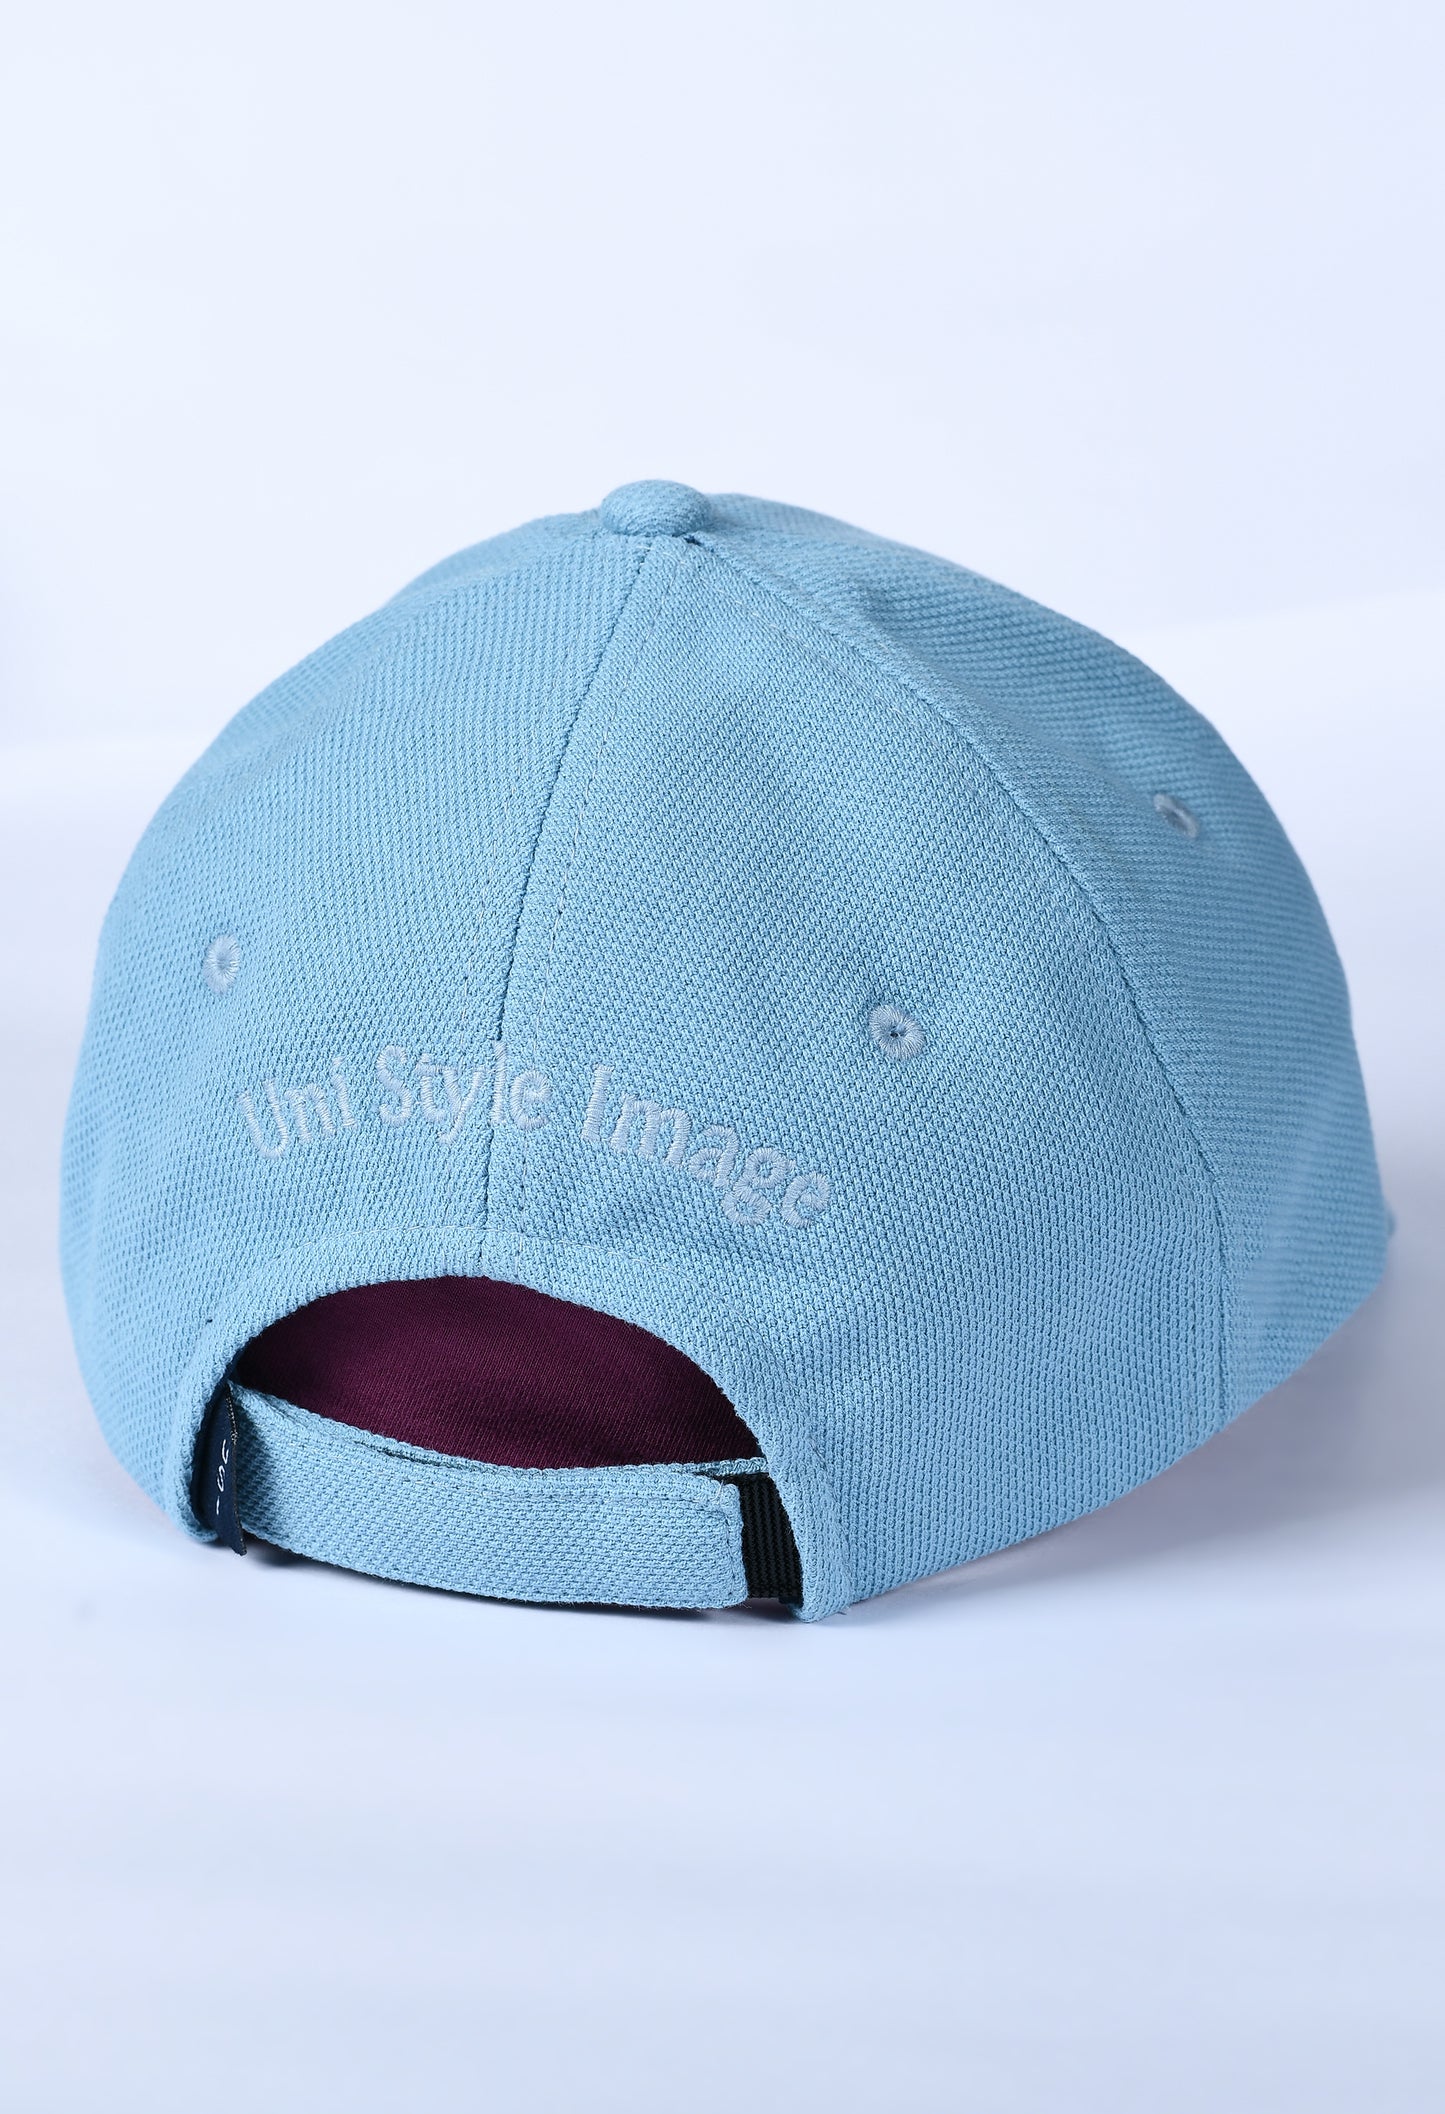 USI Classic Pique Cap | Cotton | Durable | High quality